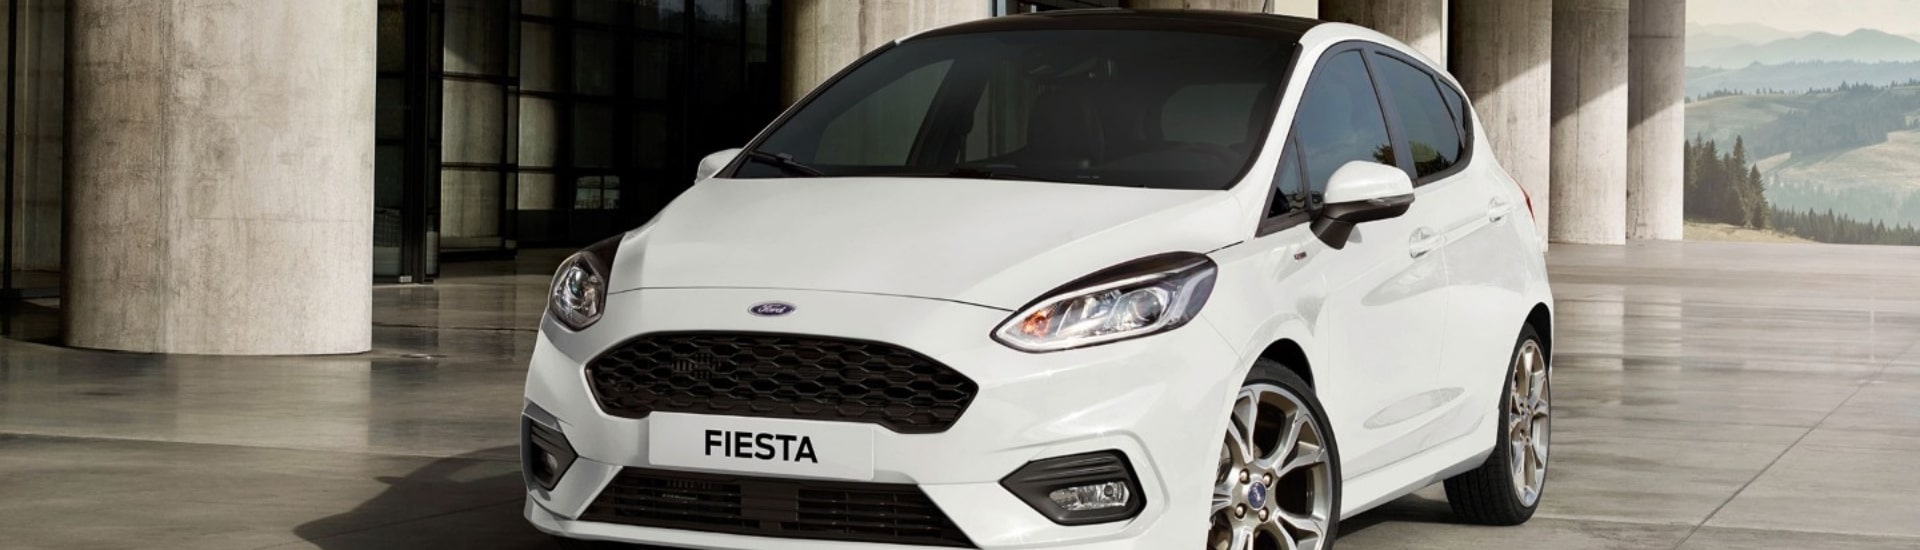 Ford Fiesta - Dual Controls - Pass Drive